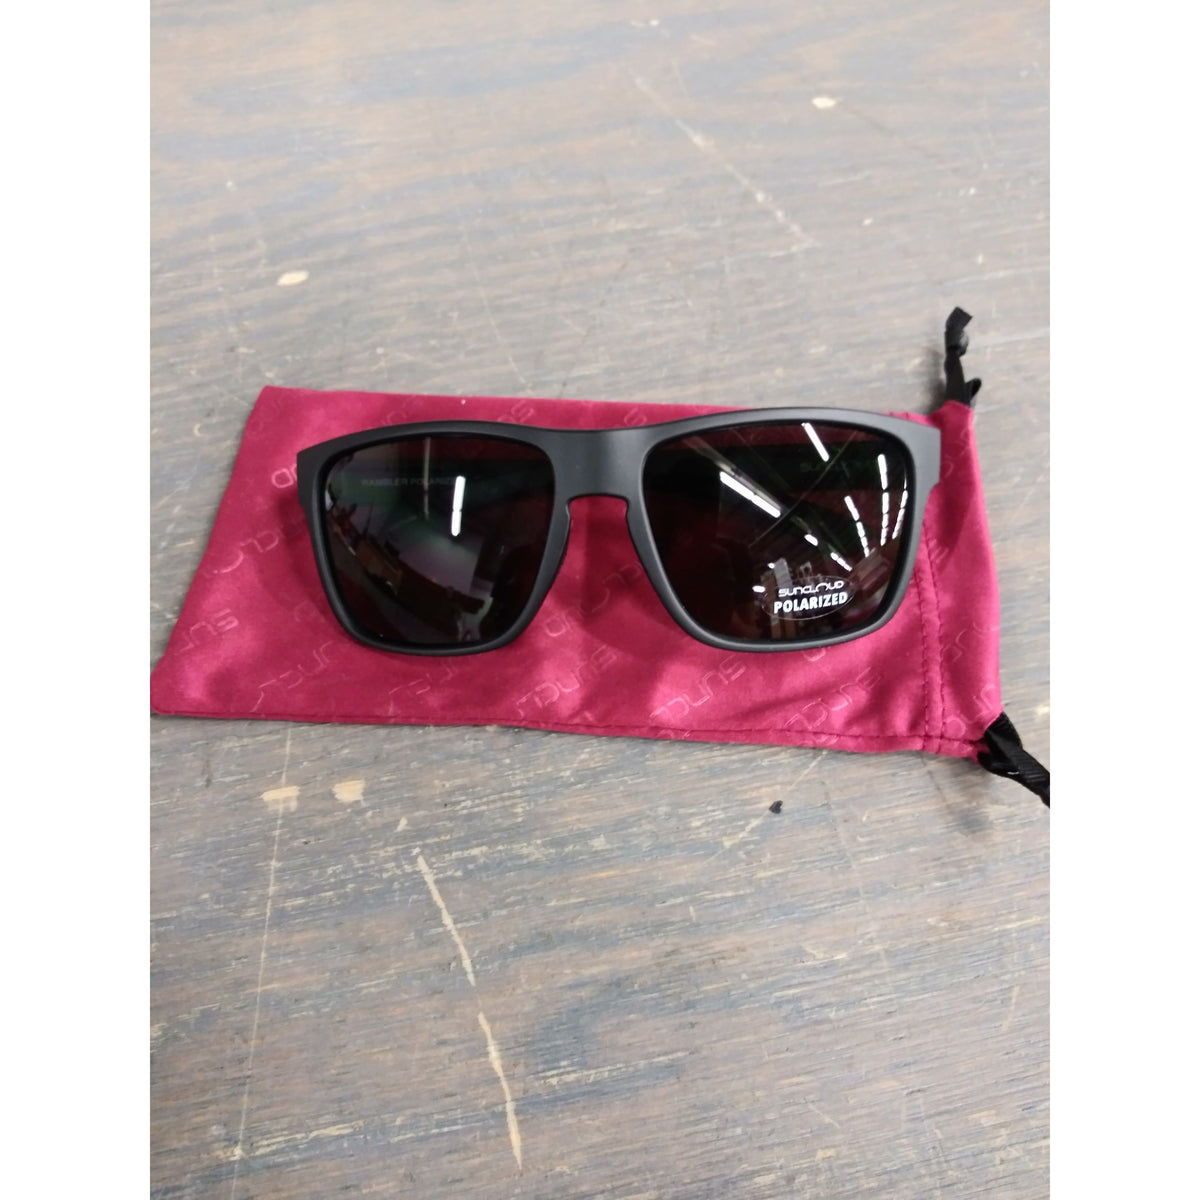 Suncloud Rambler Sunglasses - Matte Black; Polarized Gray Green - Used - Acceptable